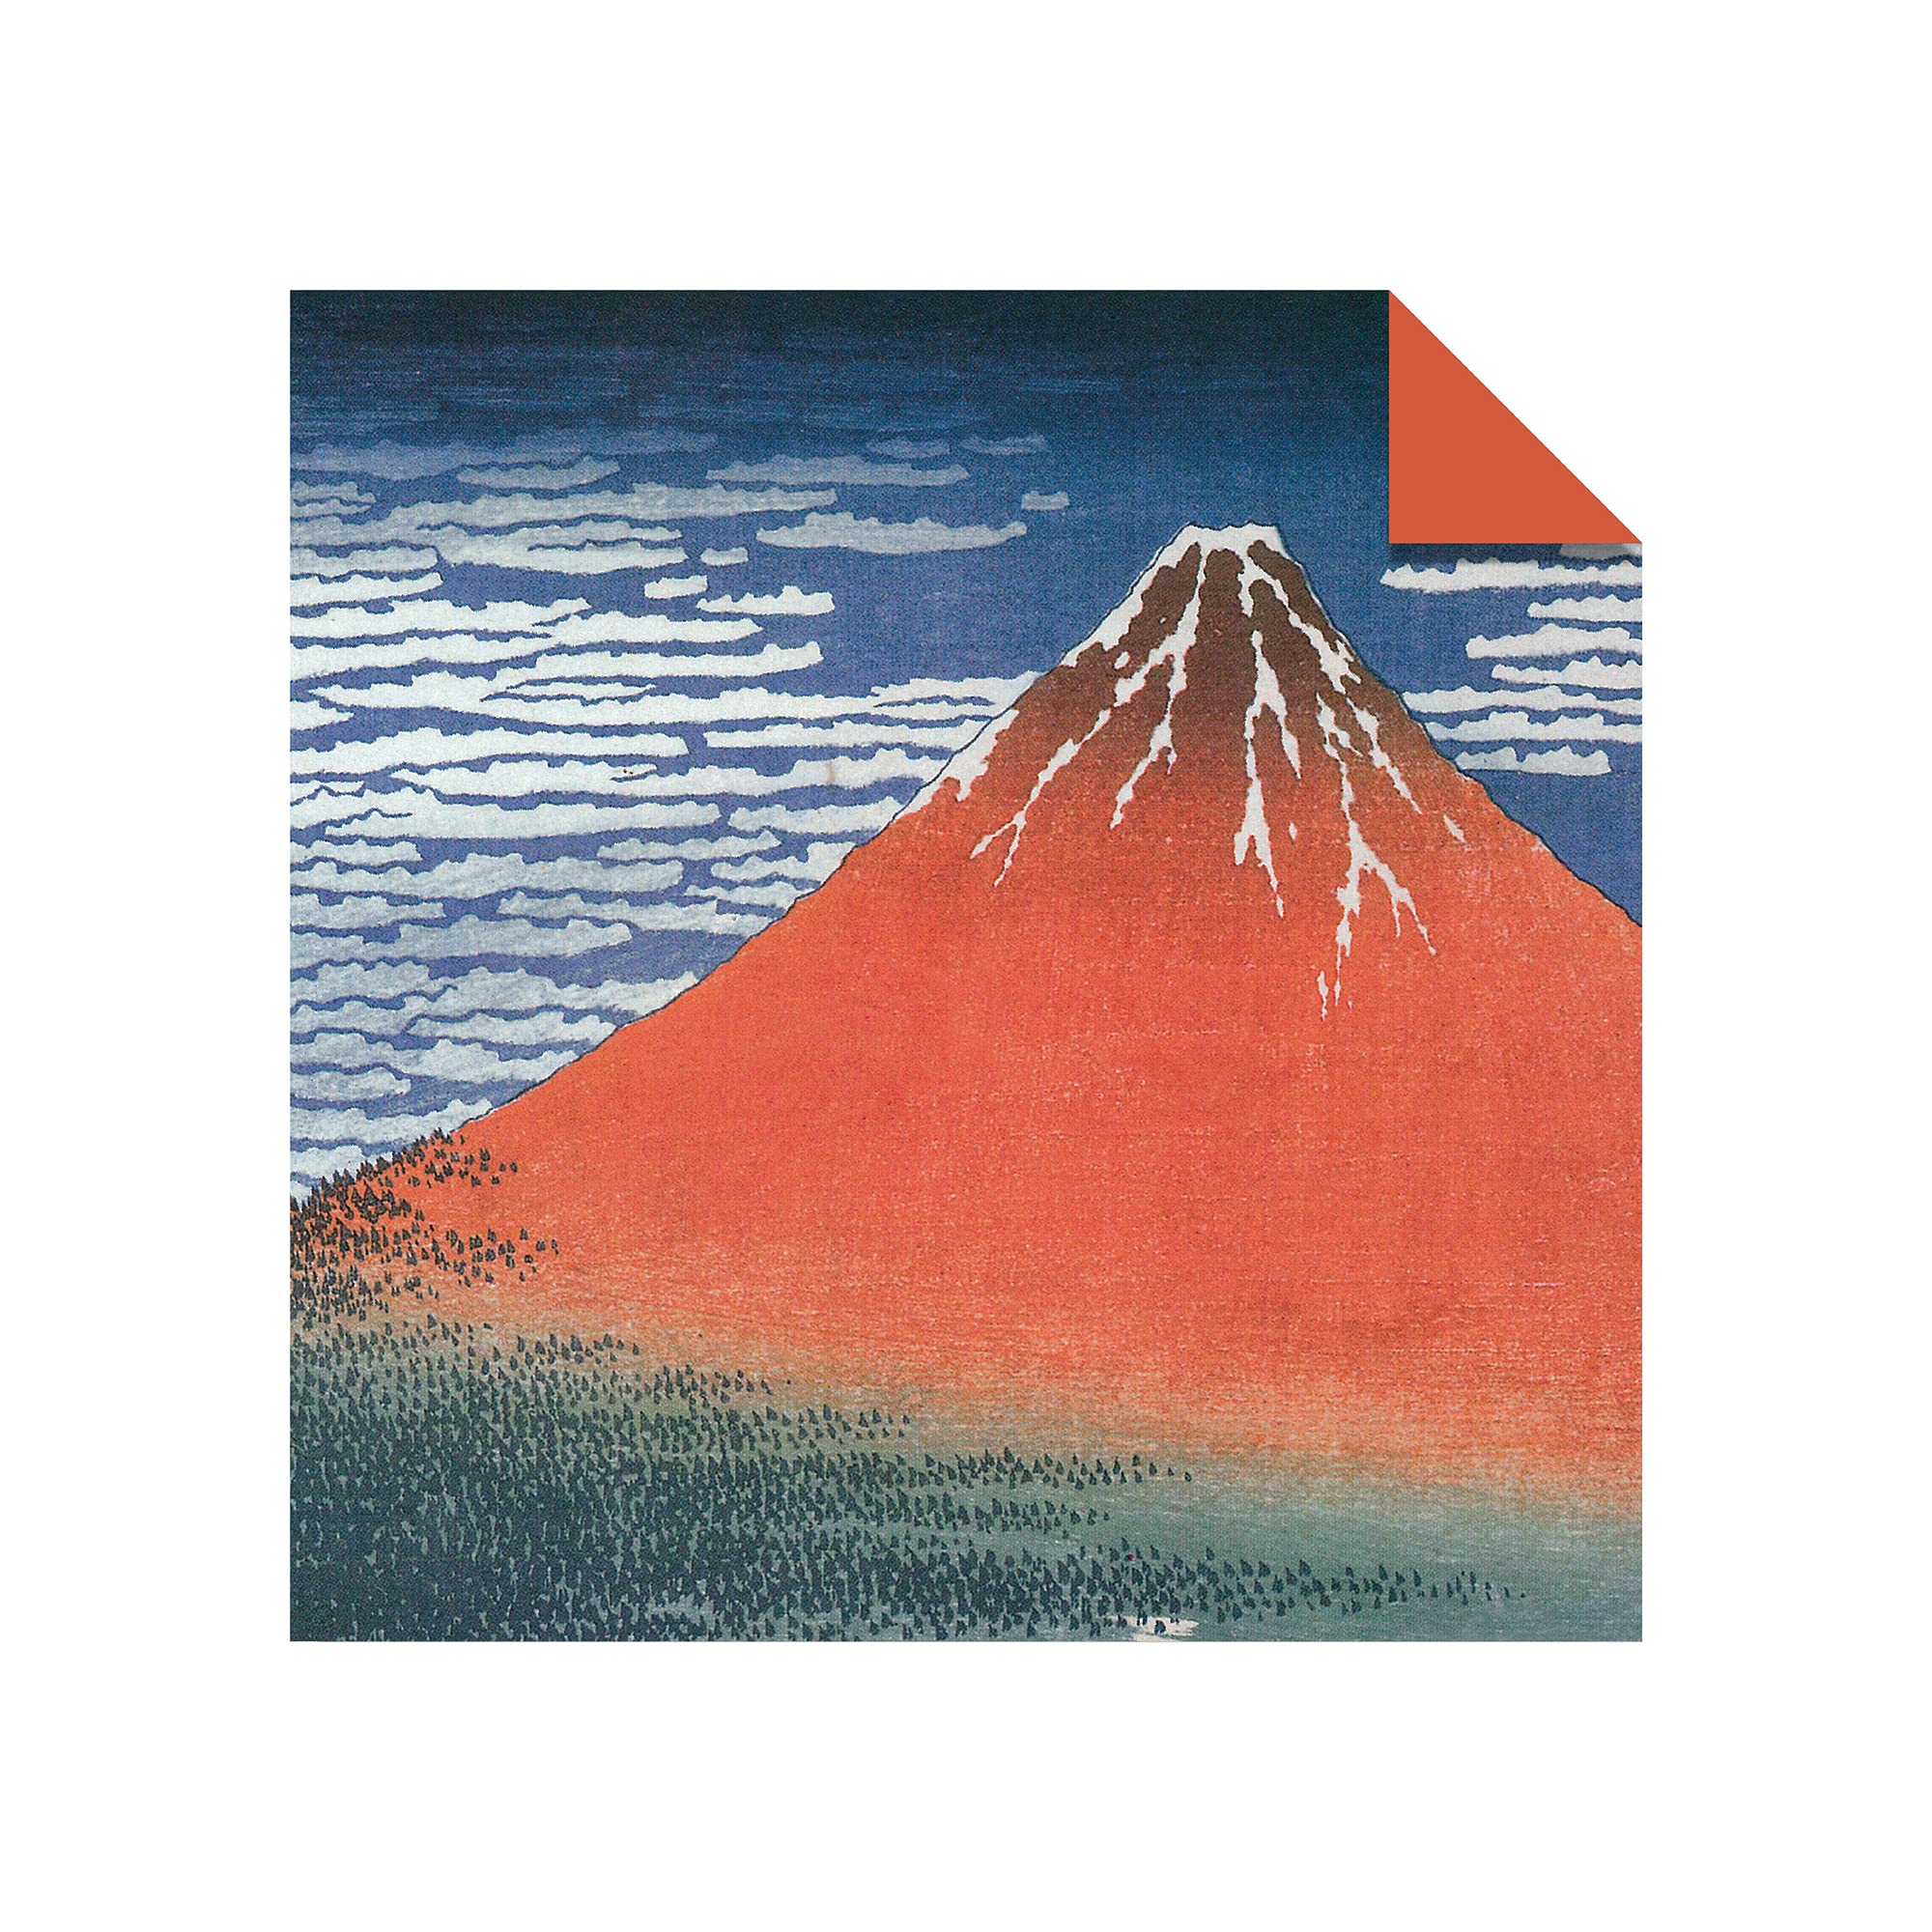 Origami Paper 100 sheets Hokusai Prints 8 1/4